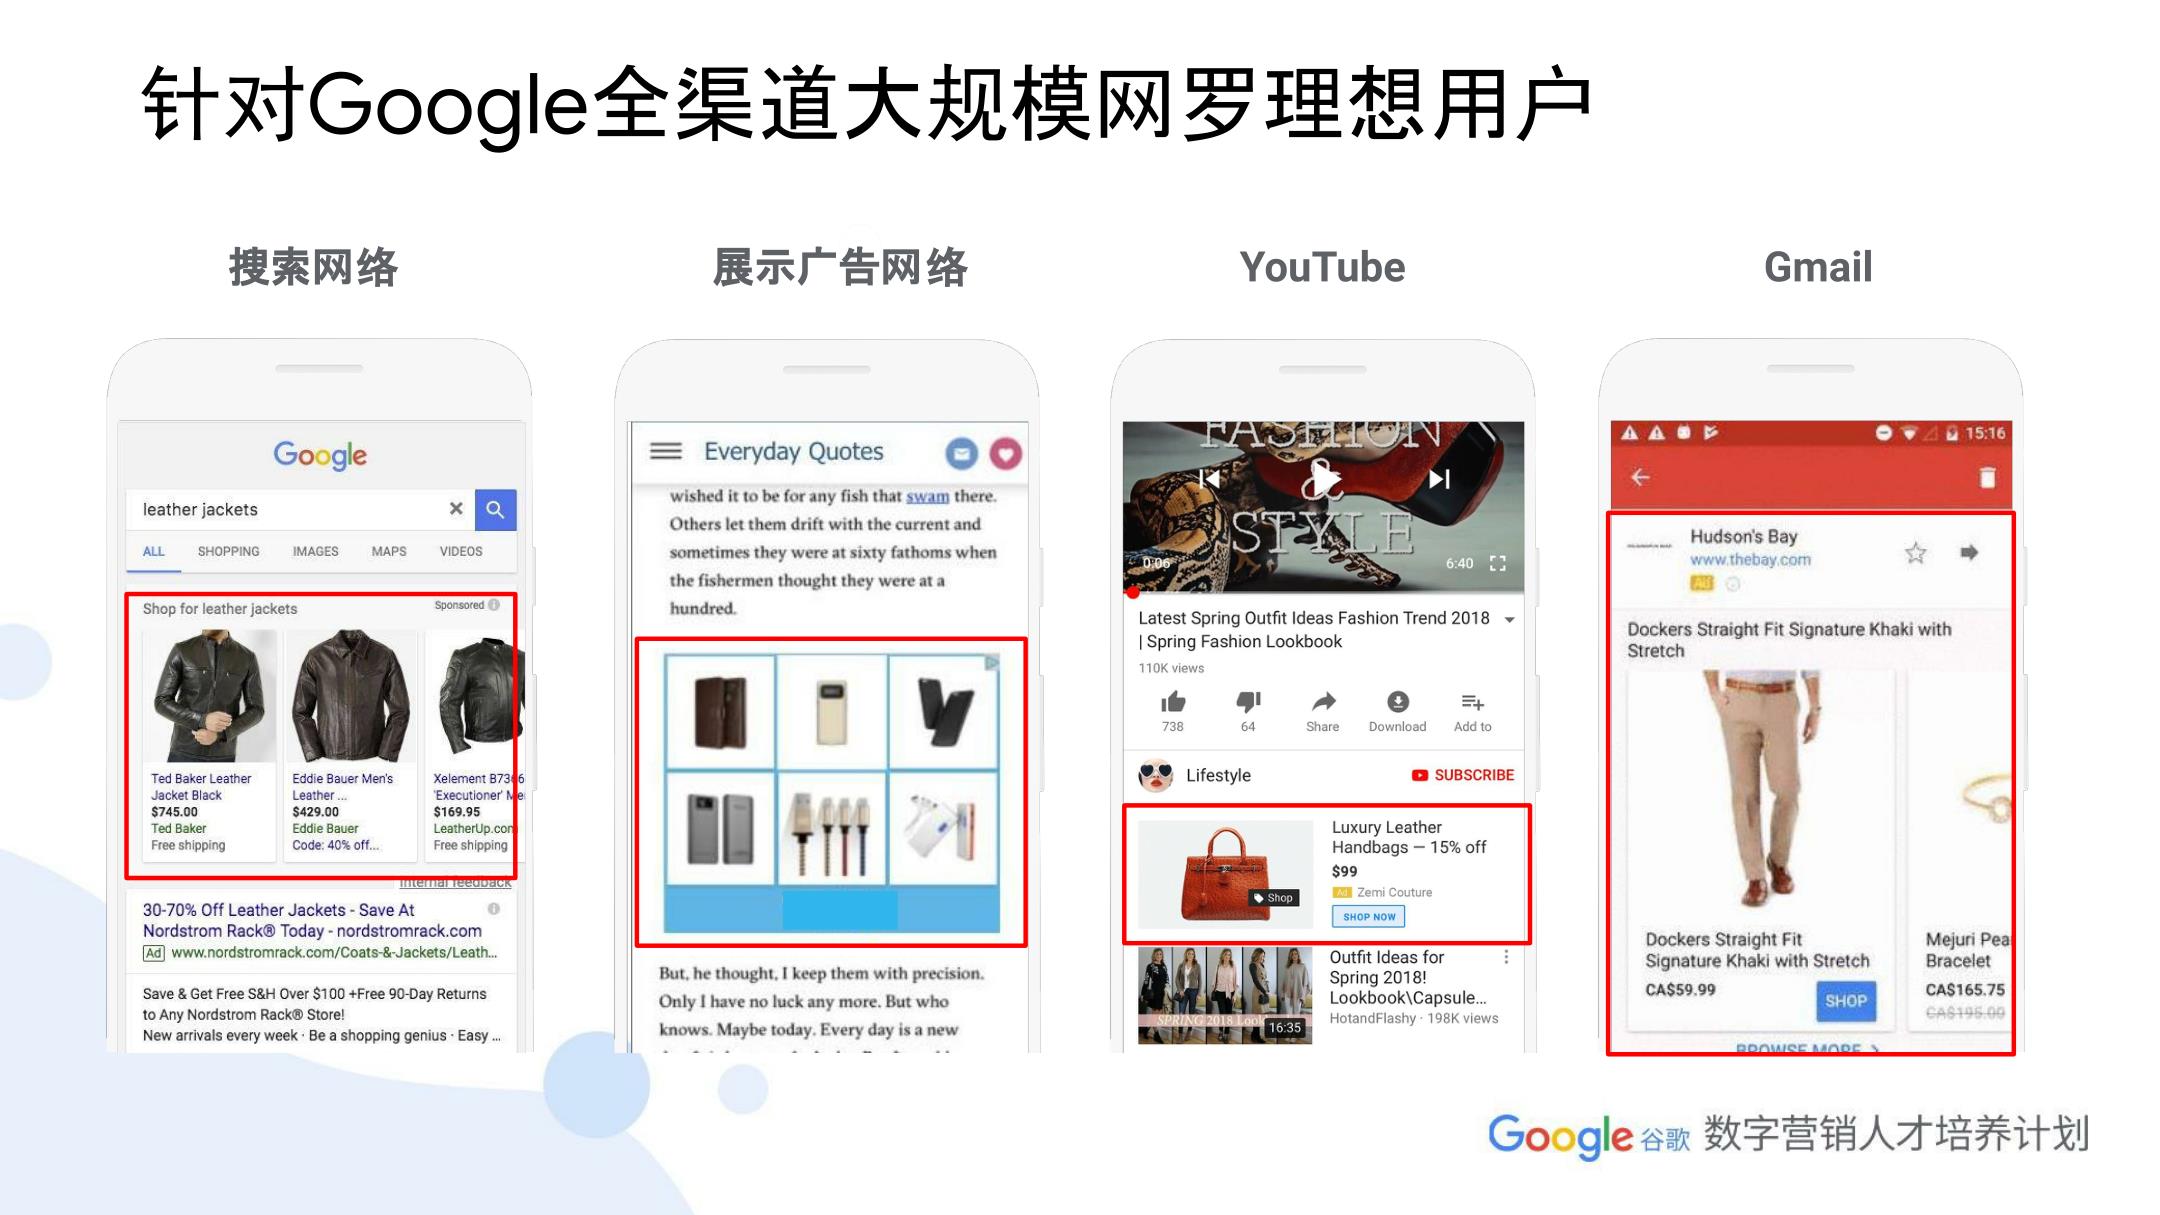 GOOGLE 数字营销直播课高级课程 - 谷歌广告投放